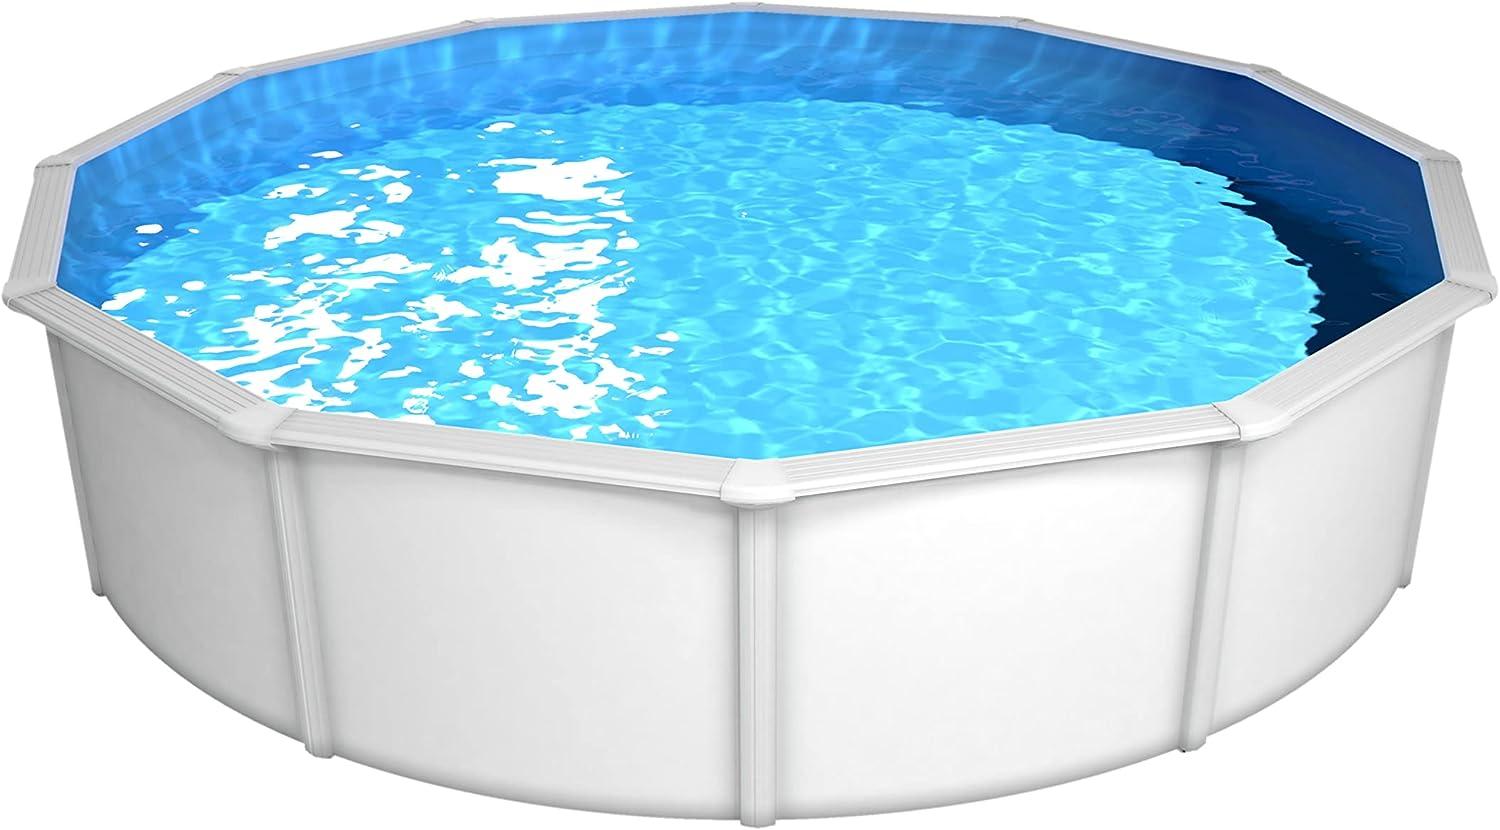 Steinbach Stahlwand Swimming Pool Set "Nuovo de Luxe", weiß / blau, Ø 550 x 120 cm Bild 1